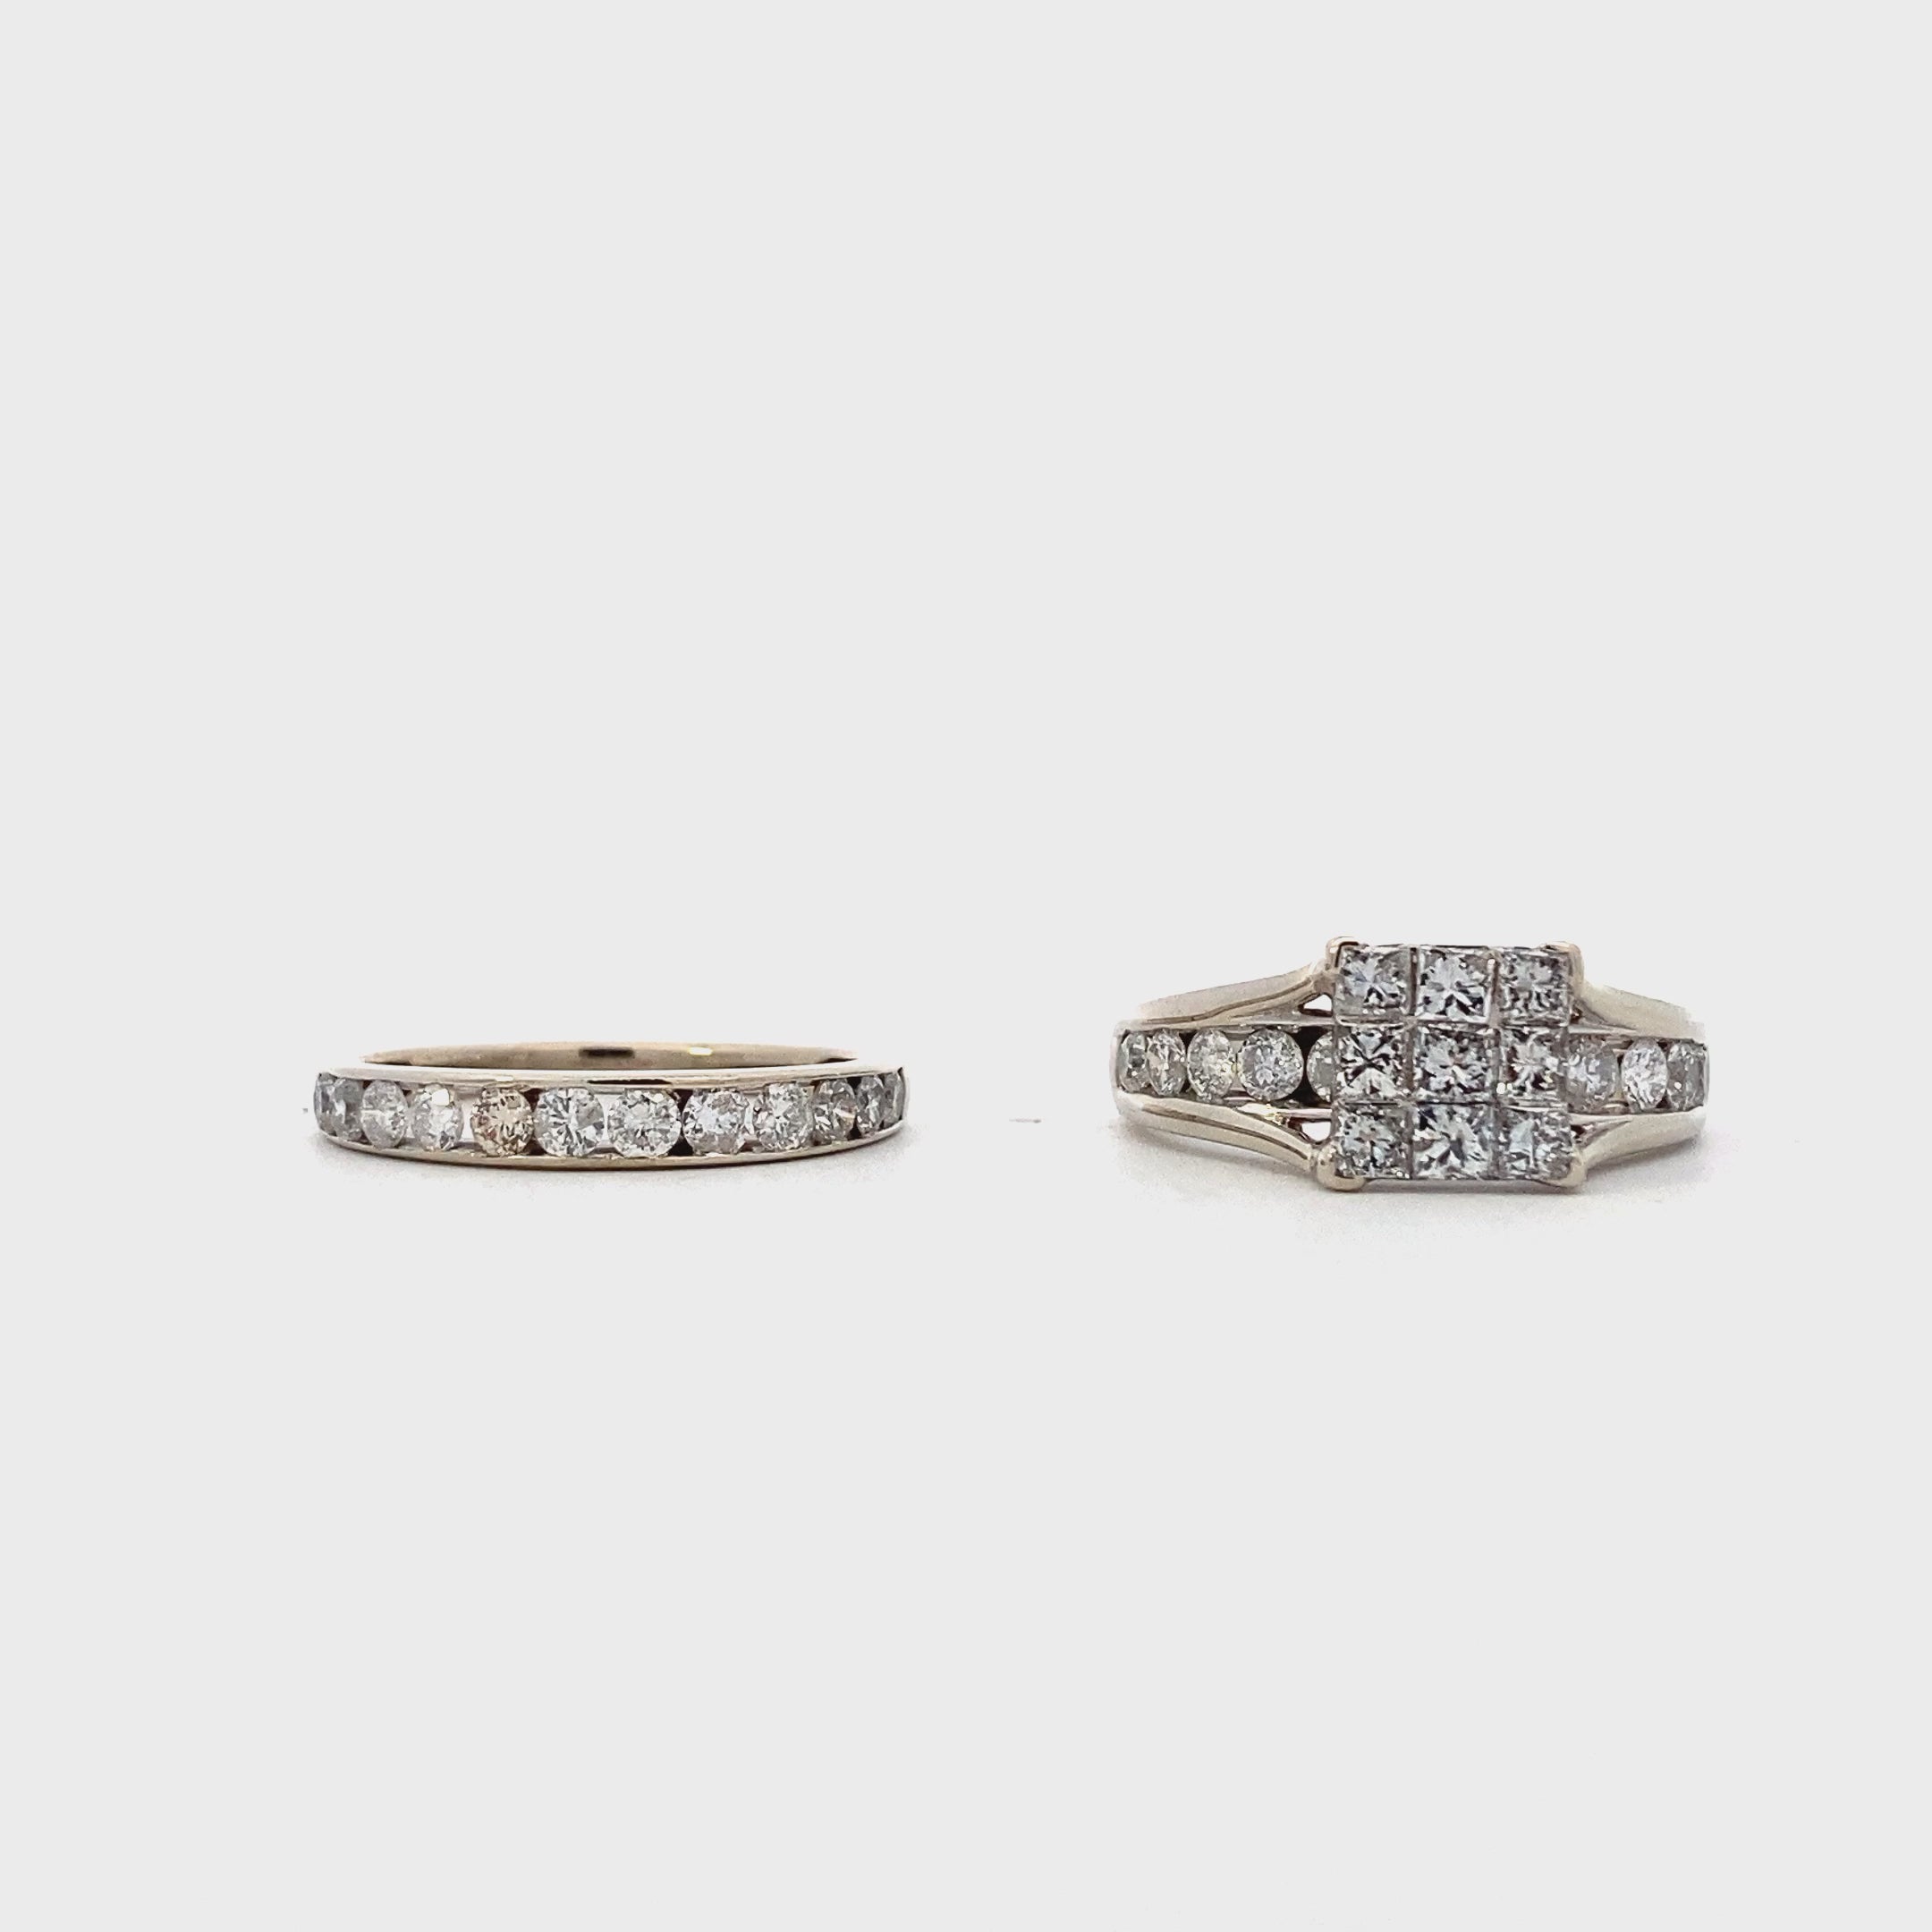 10K White Gold Diamond Engagement & Wedding Ring Set - 1.14ct